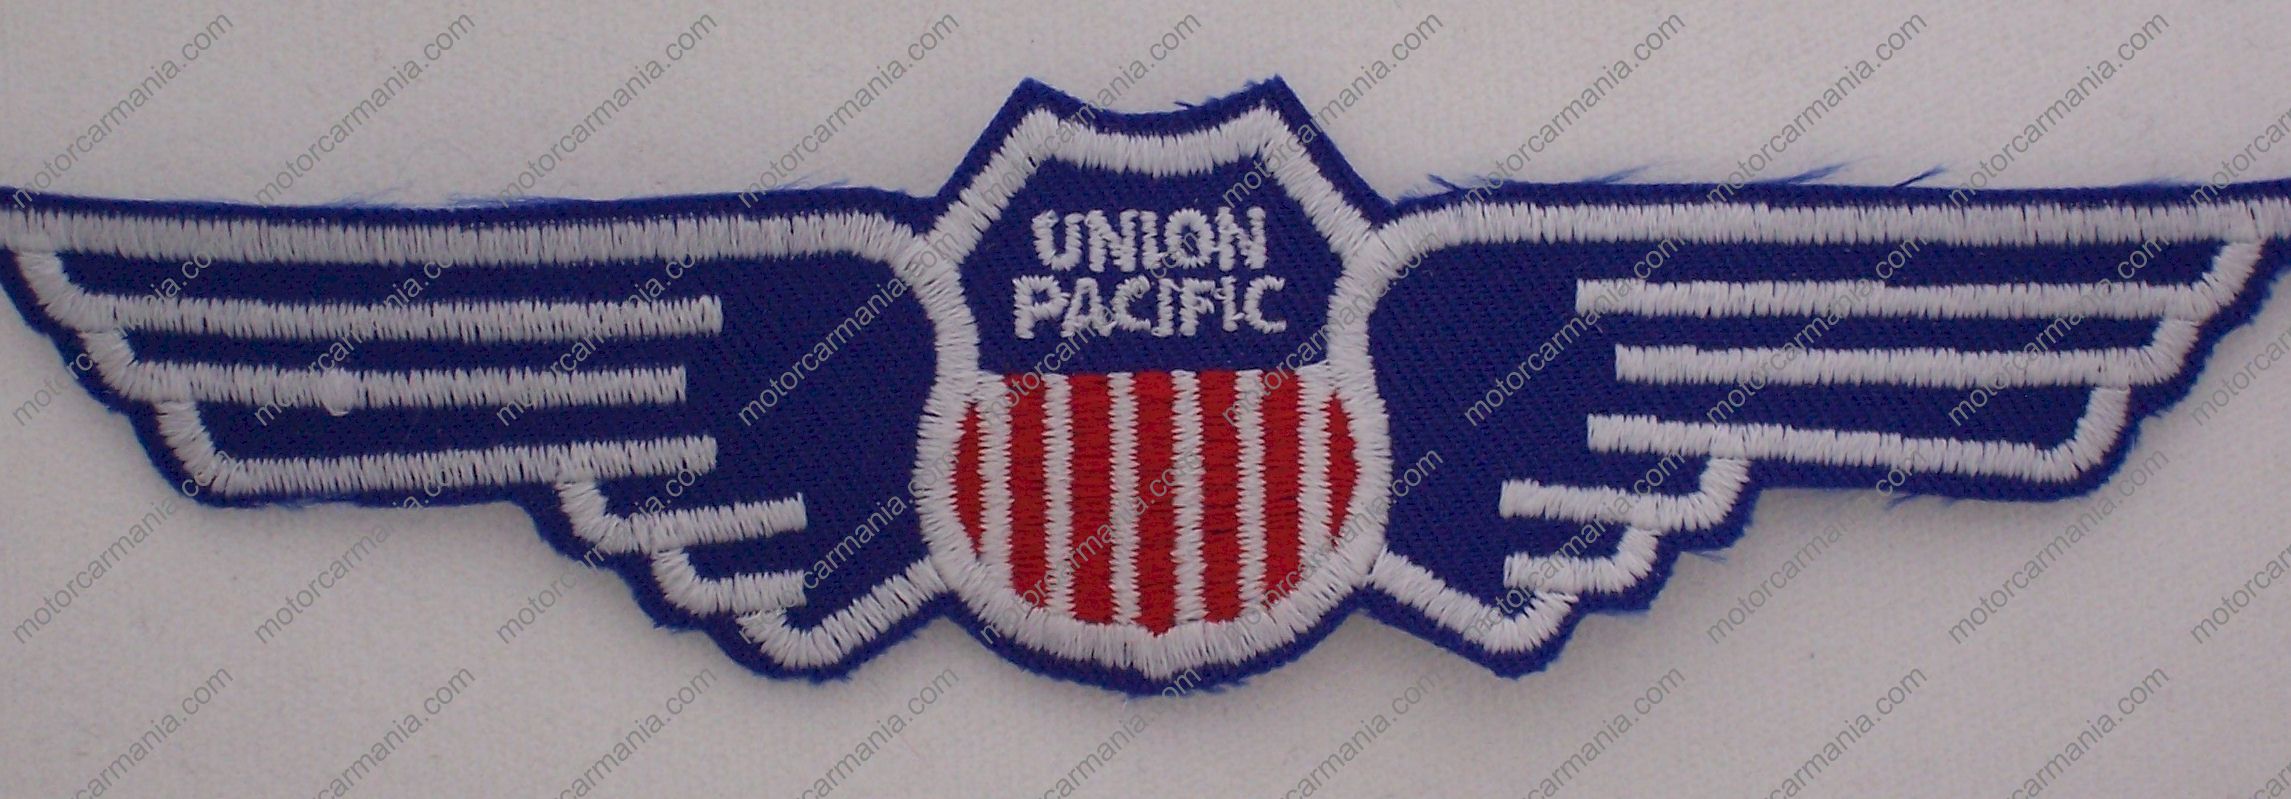 union pacific logo